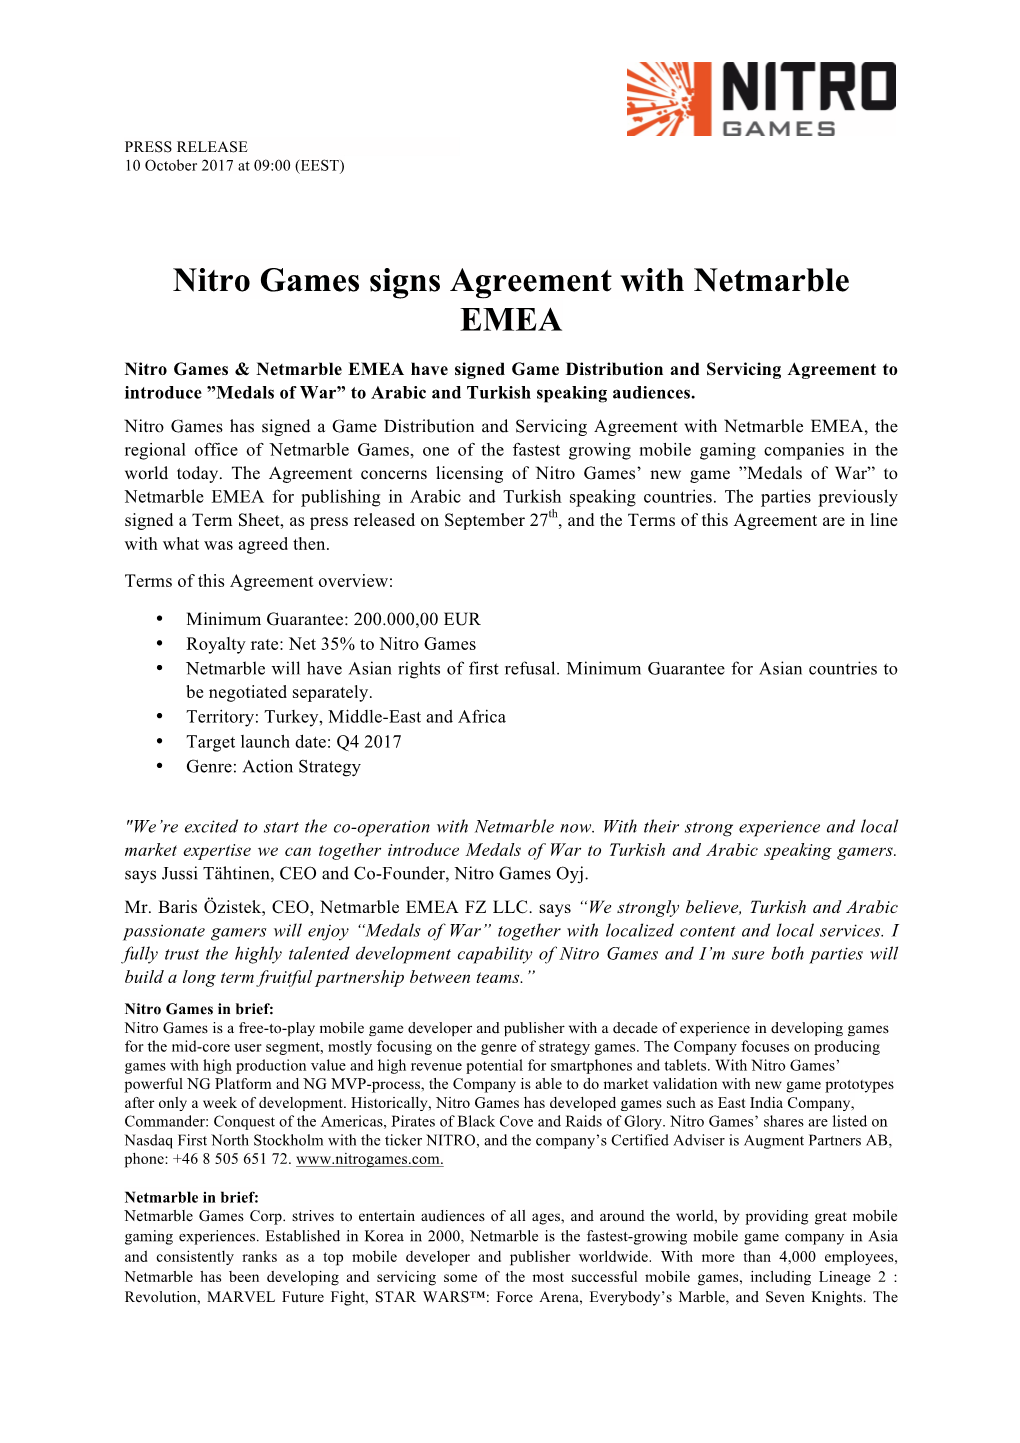 Nitro Games Signs Agreement with Netmarble EMEA